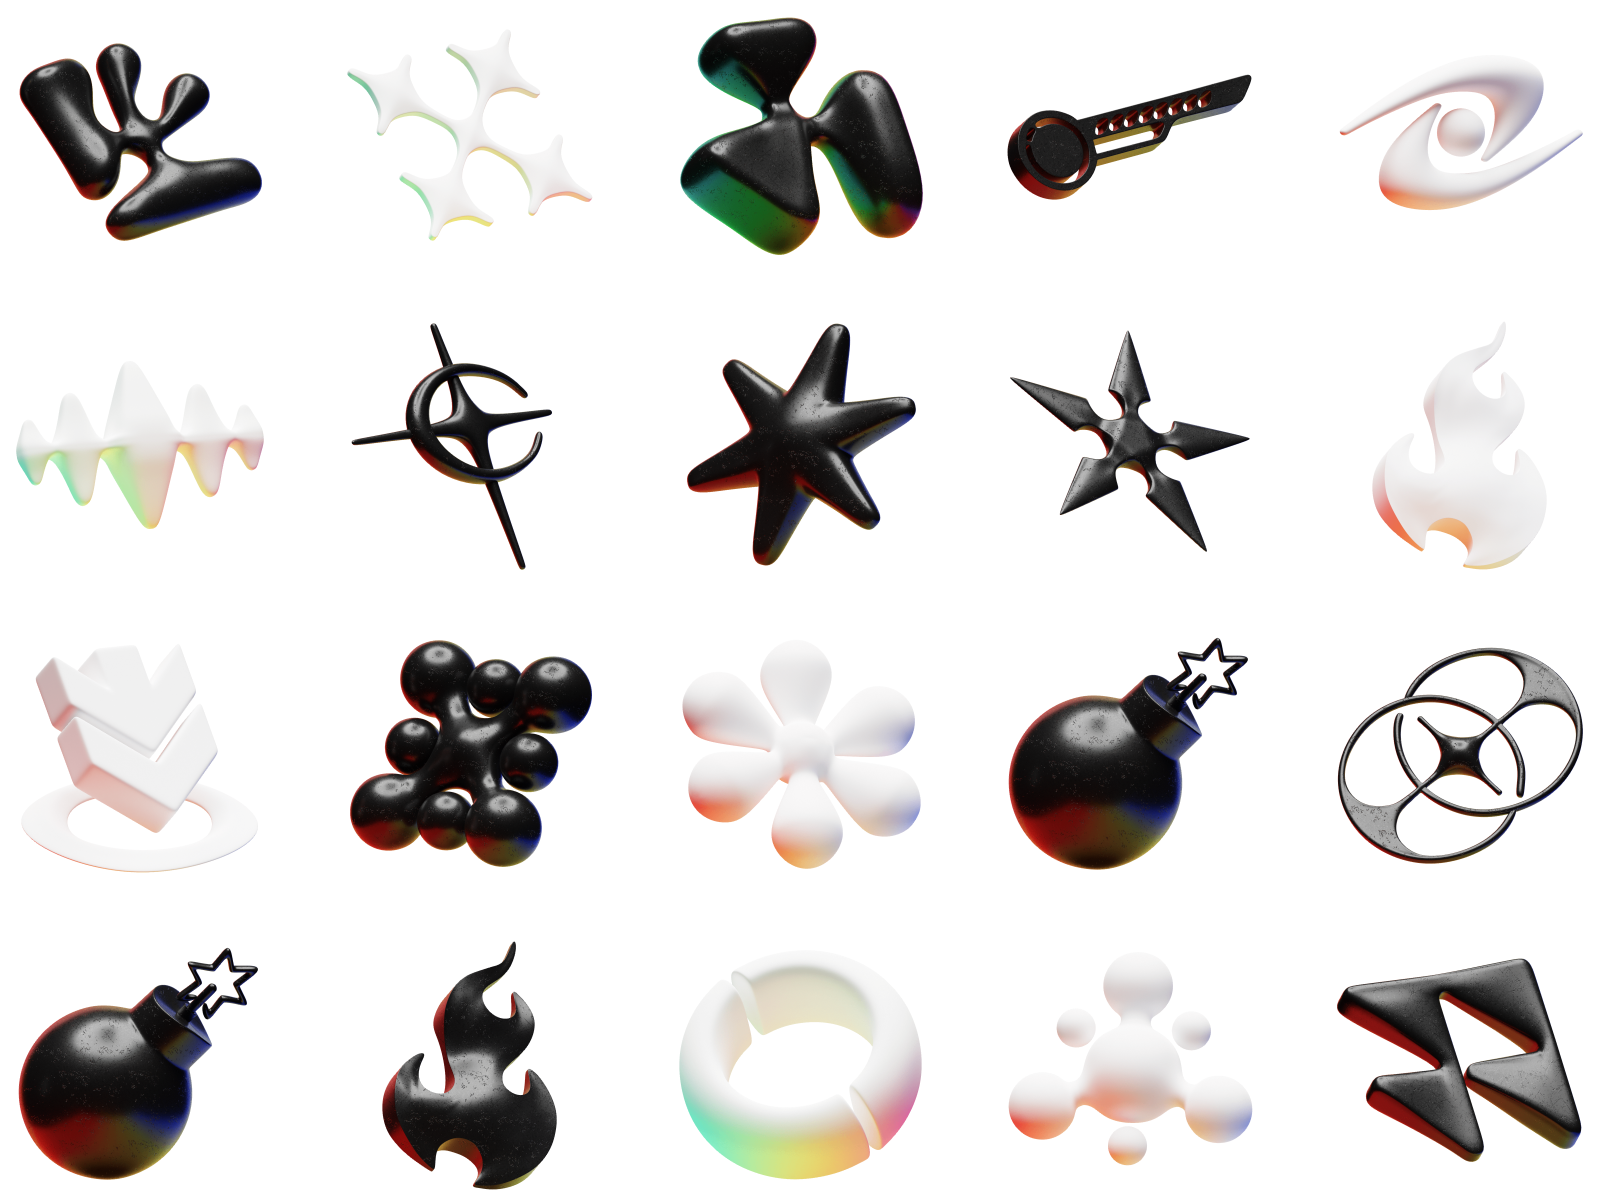 Craftwork 复古千禧Y2K风格3D创意耀斑插画图标模型素材包 3D Y2K Icons（7582）图层云5